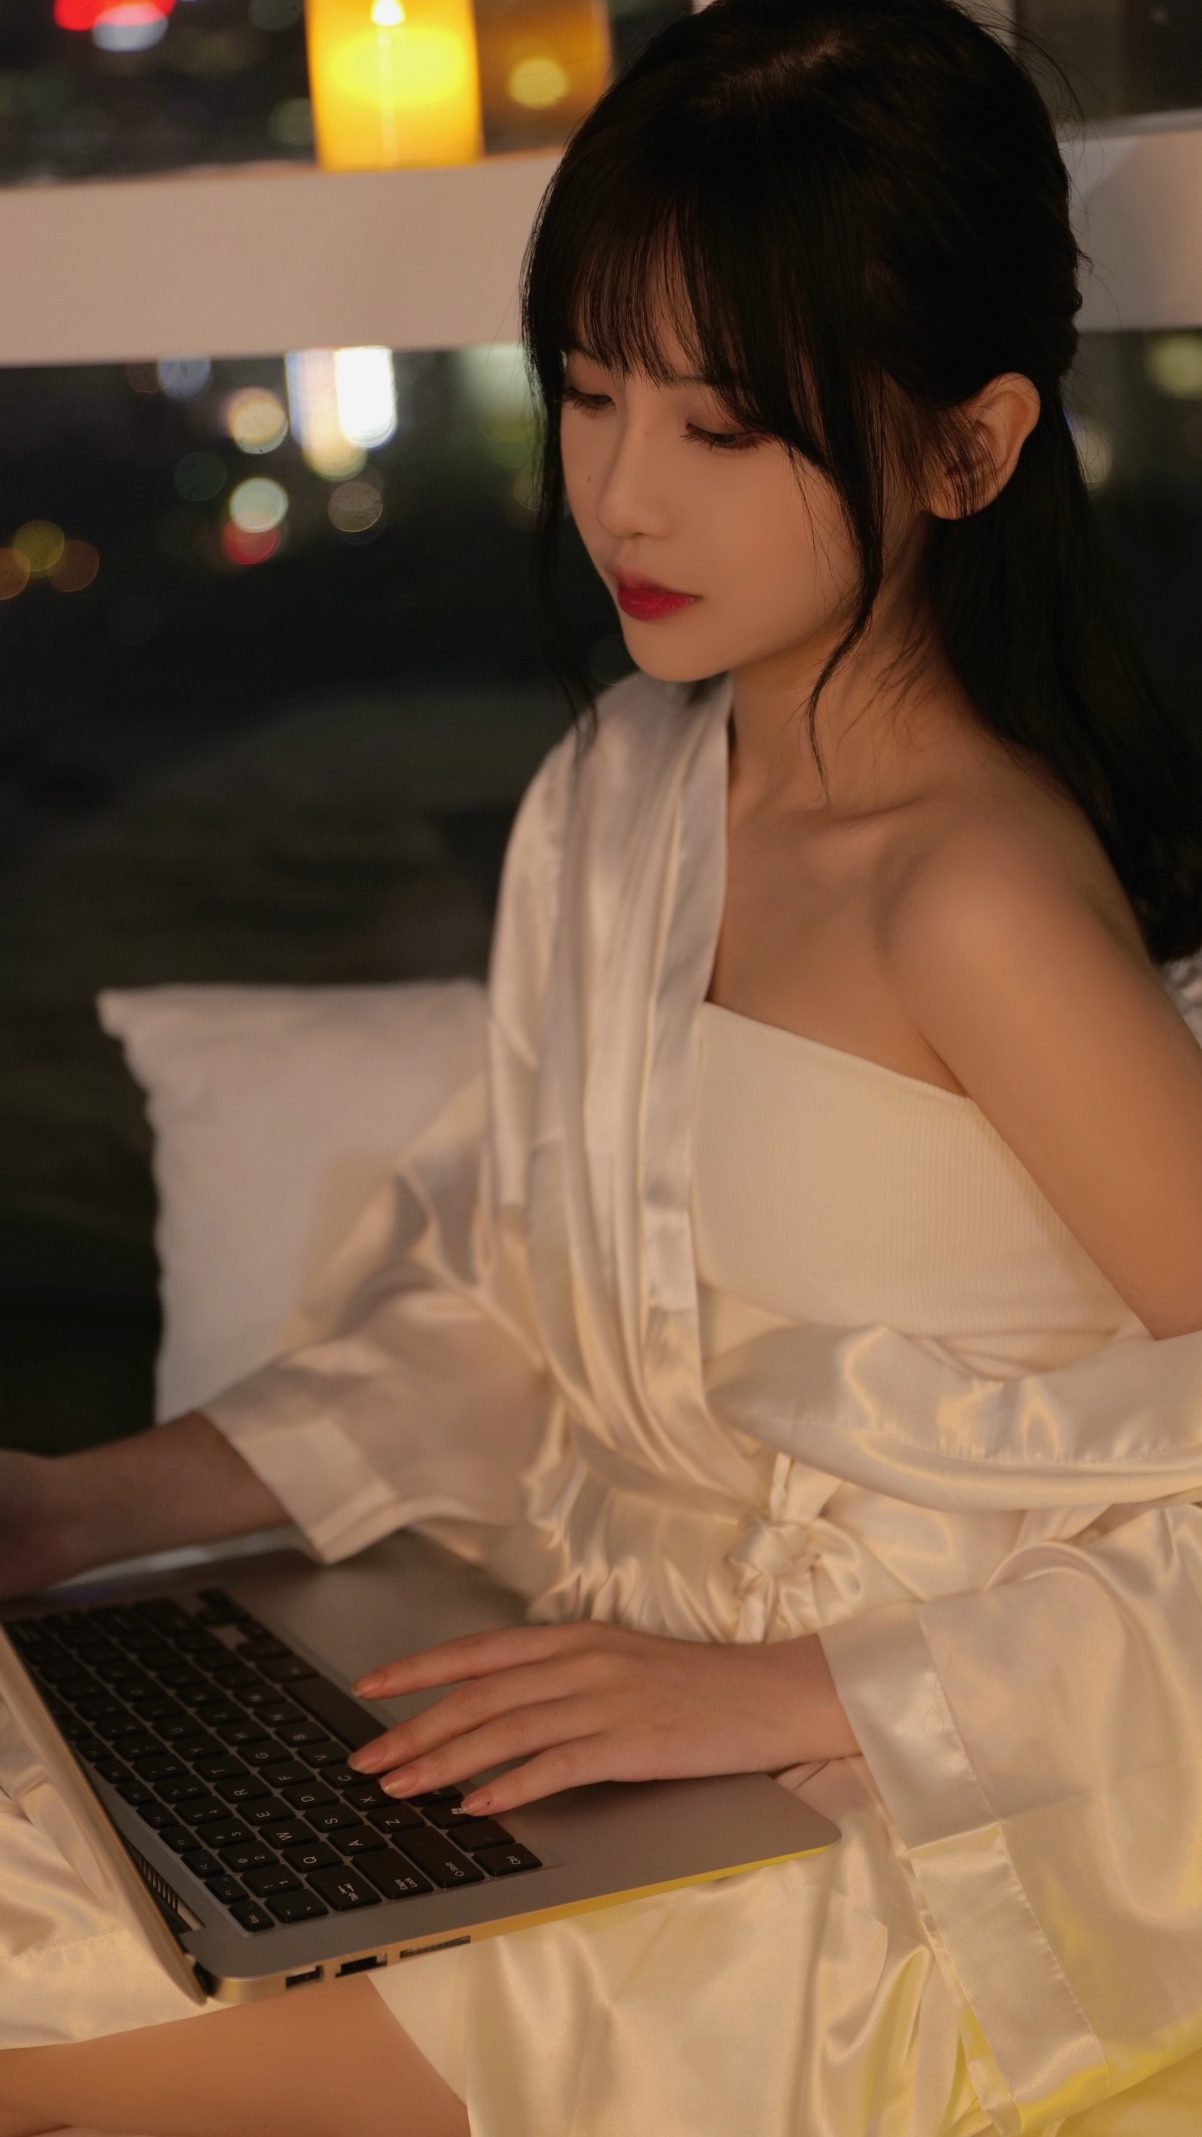 [Youmi尤蜜荟] Vol.884 Carol周妍希 - Share erotic Asian girl picture & livestream